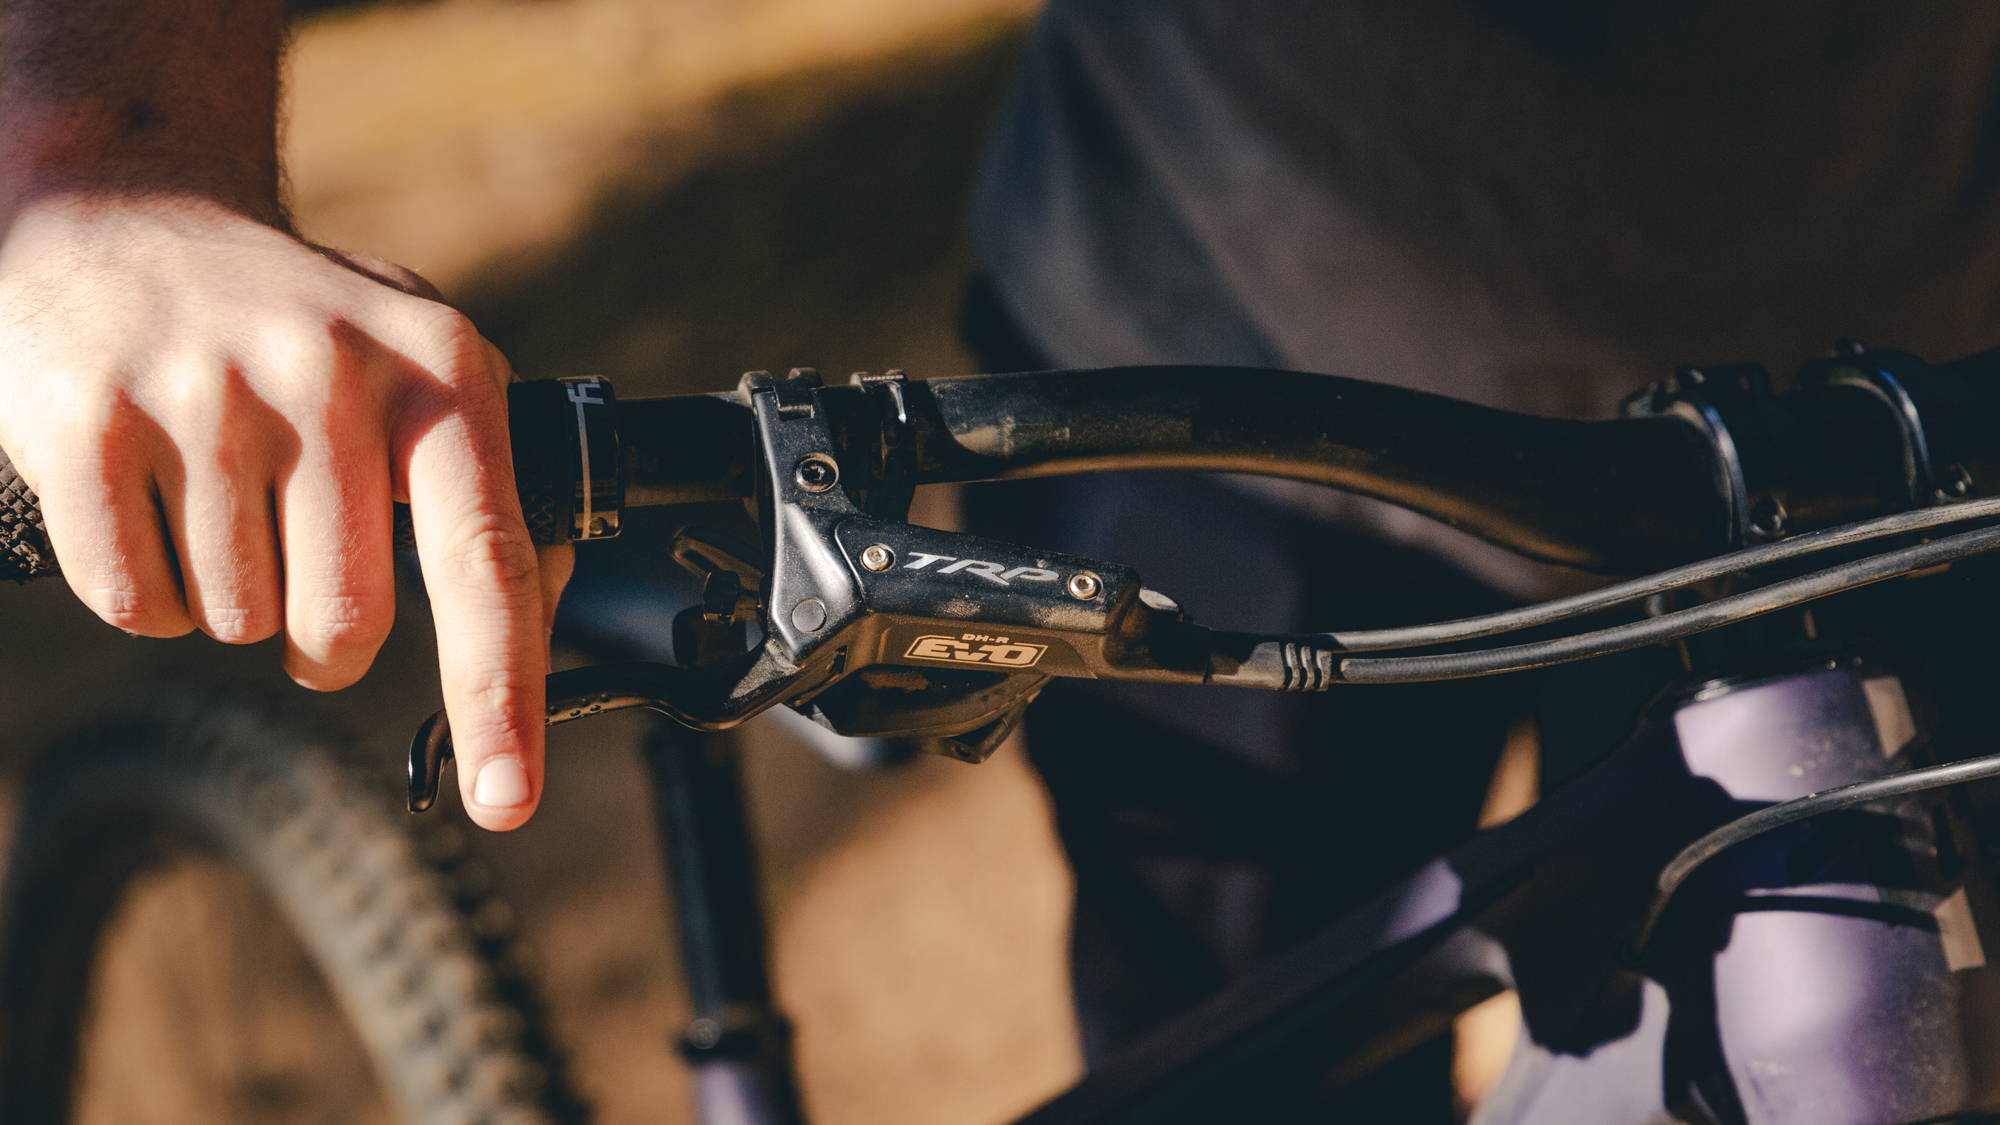 detail of the trp dh-r evo mountain bike brake lever on handlebars